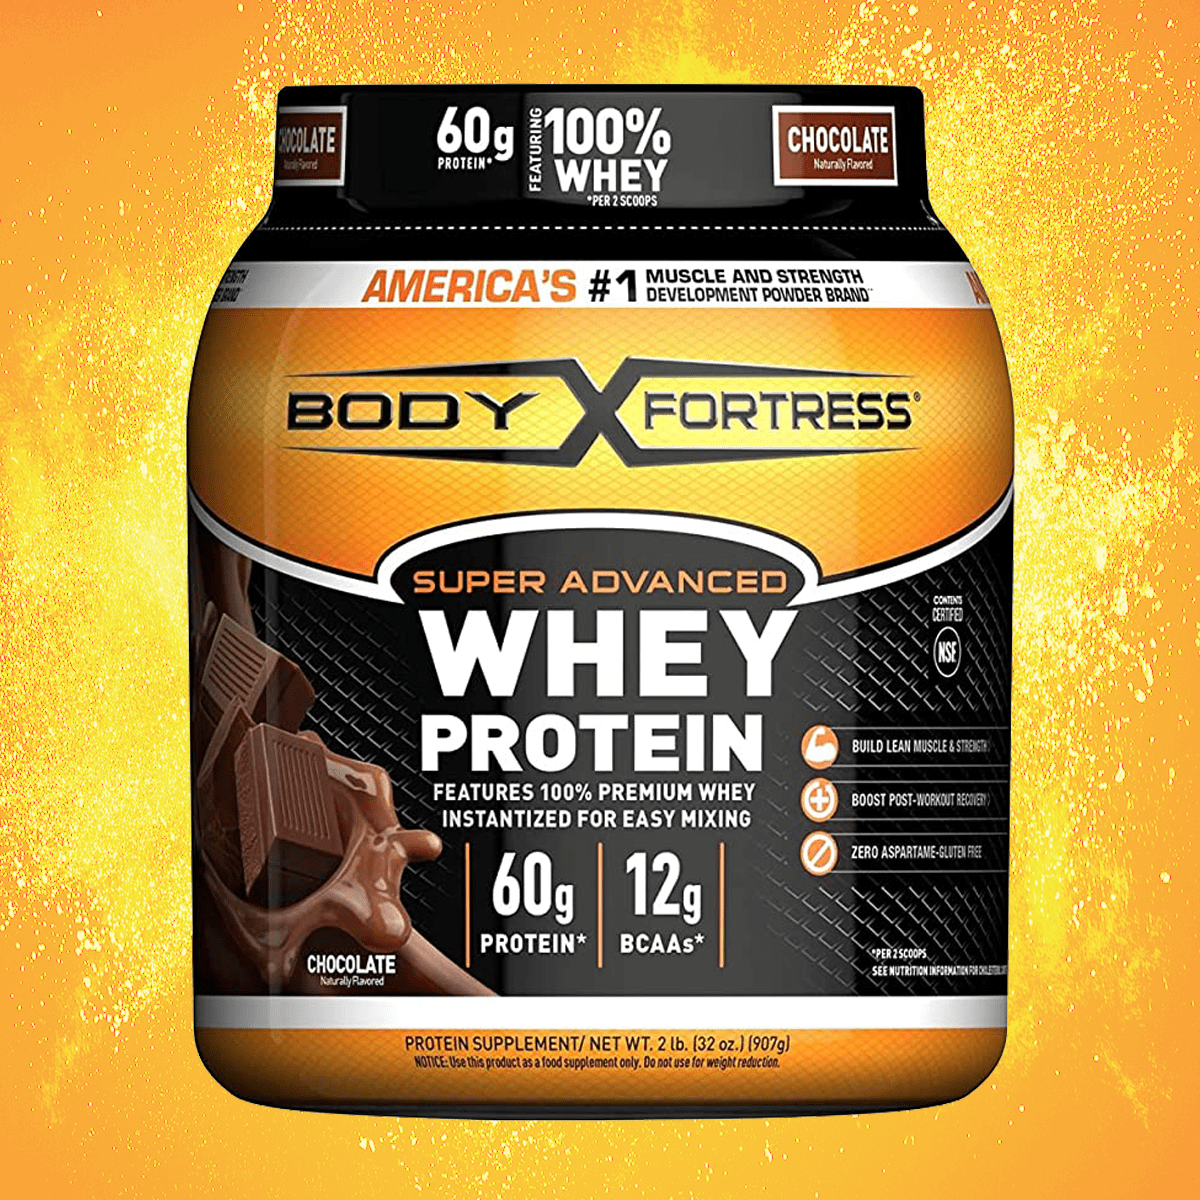 100% Whey, Premium Protein Powder, Chocolate – Body Fortress